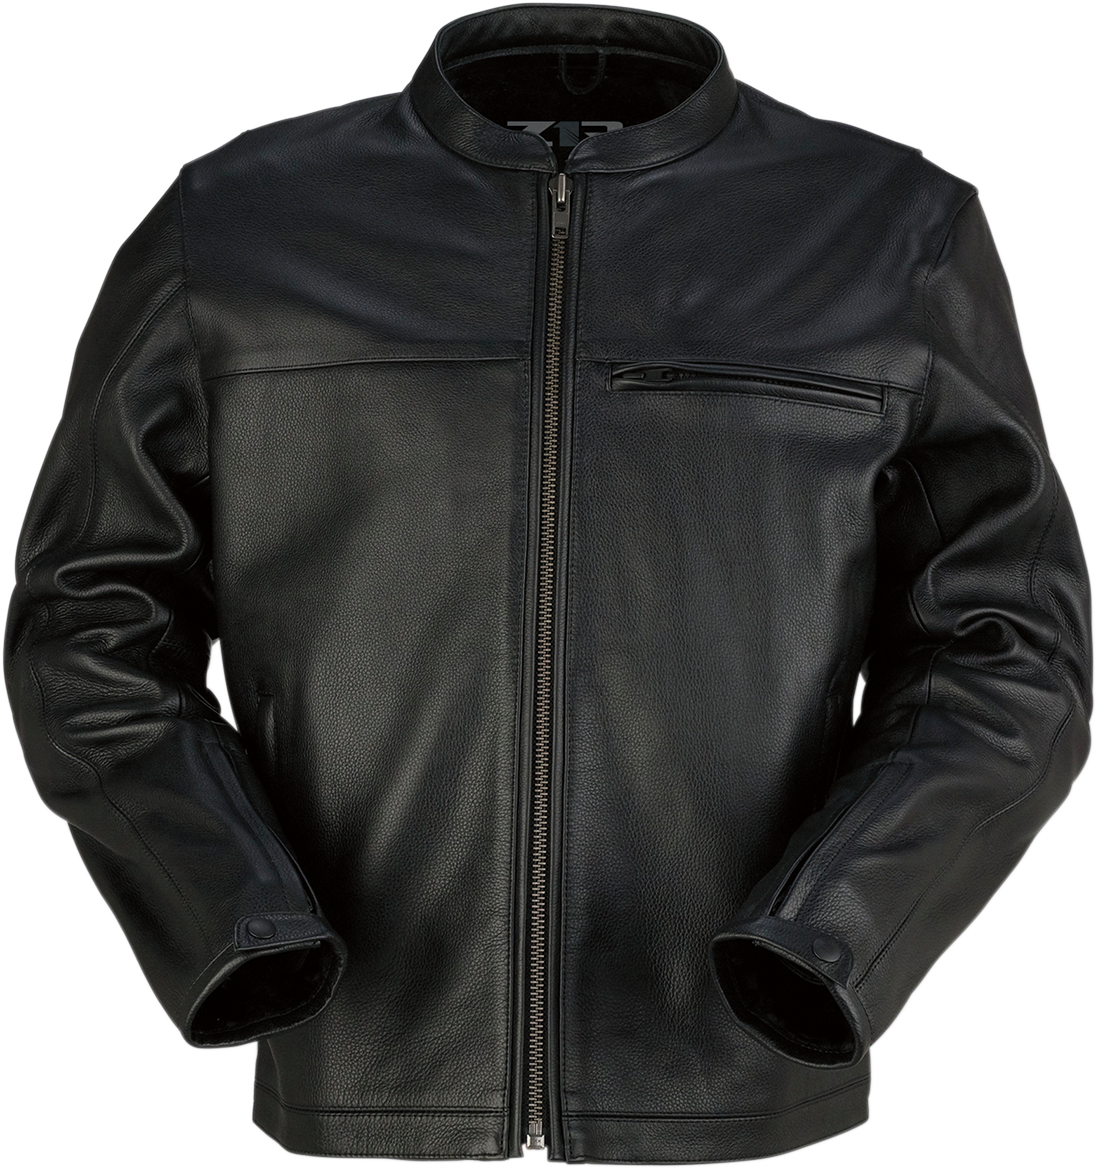 Z1R Munition Leather Jacket - Black - 2XL 2810-3485